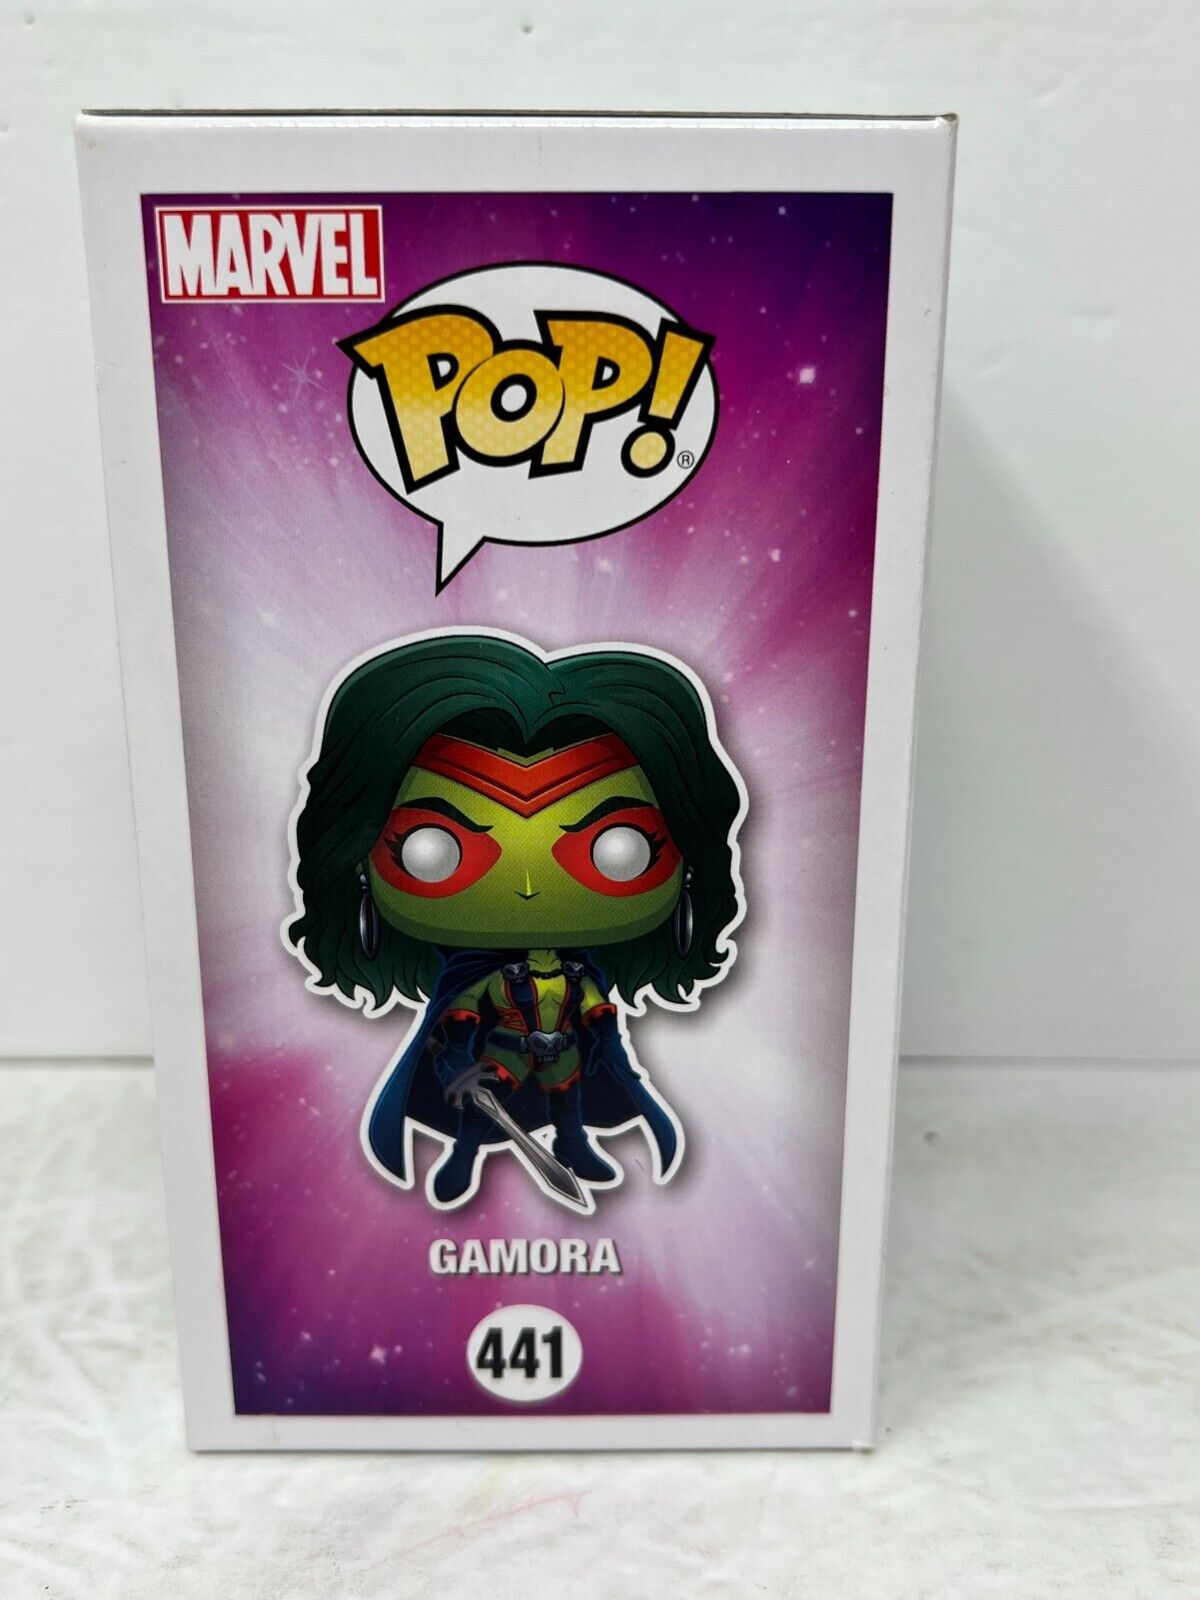 Funko Pop! Marvel #441 Gamora Convention Exclusive Bobble-head Vaulted